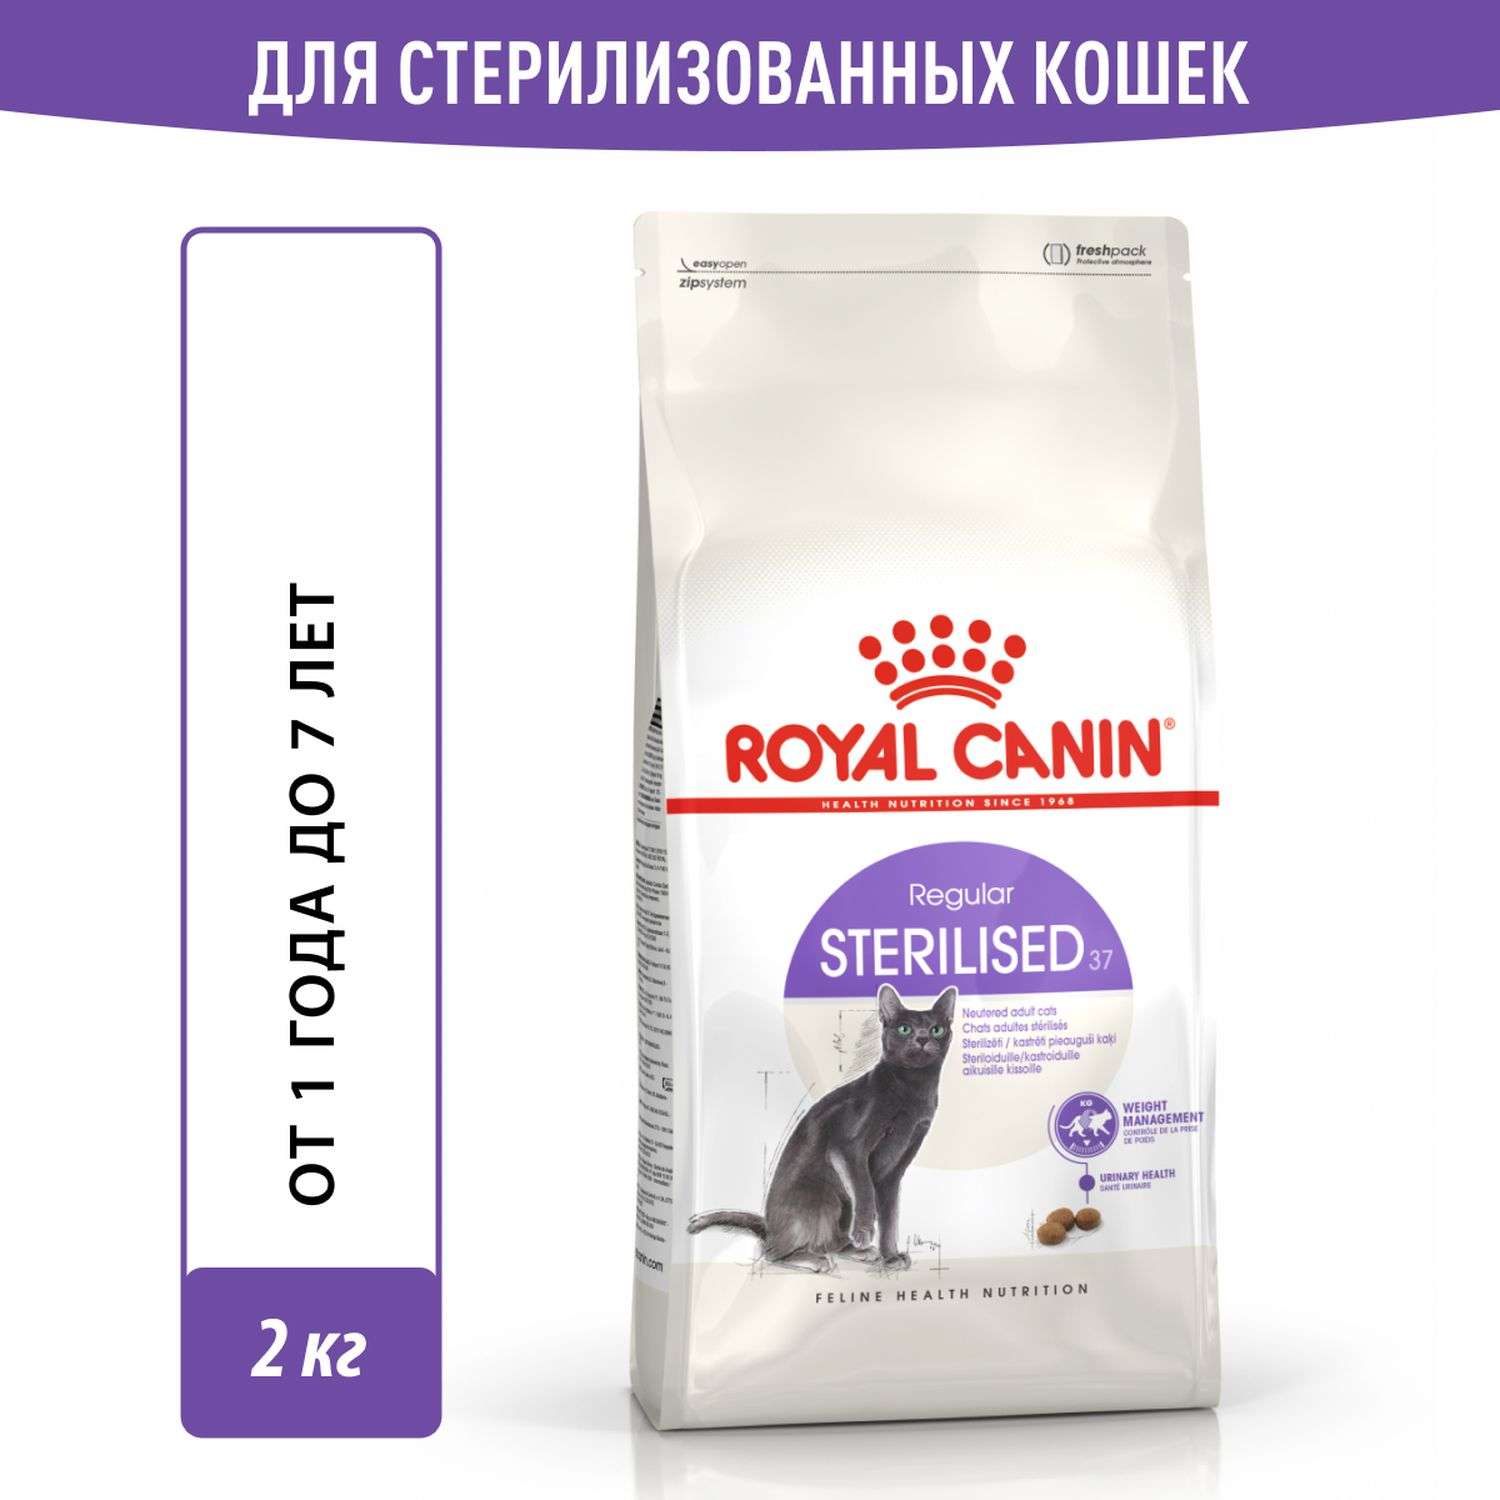 Корм сухой ROYAL CANIN Sterilised 37 2кг для стерилизованных кошек - фото 1